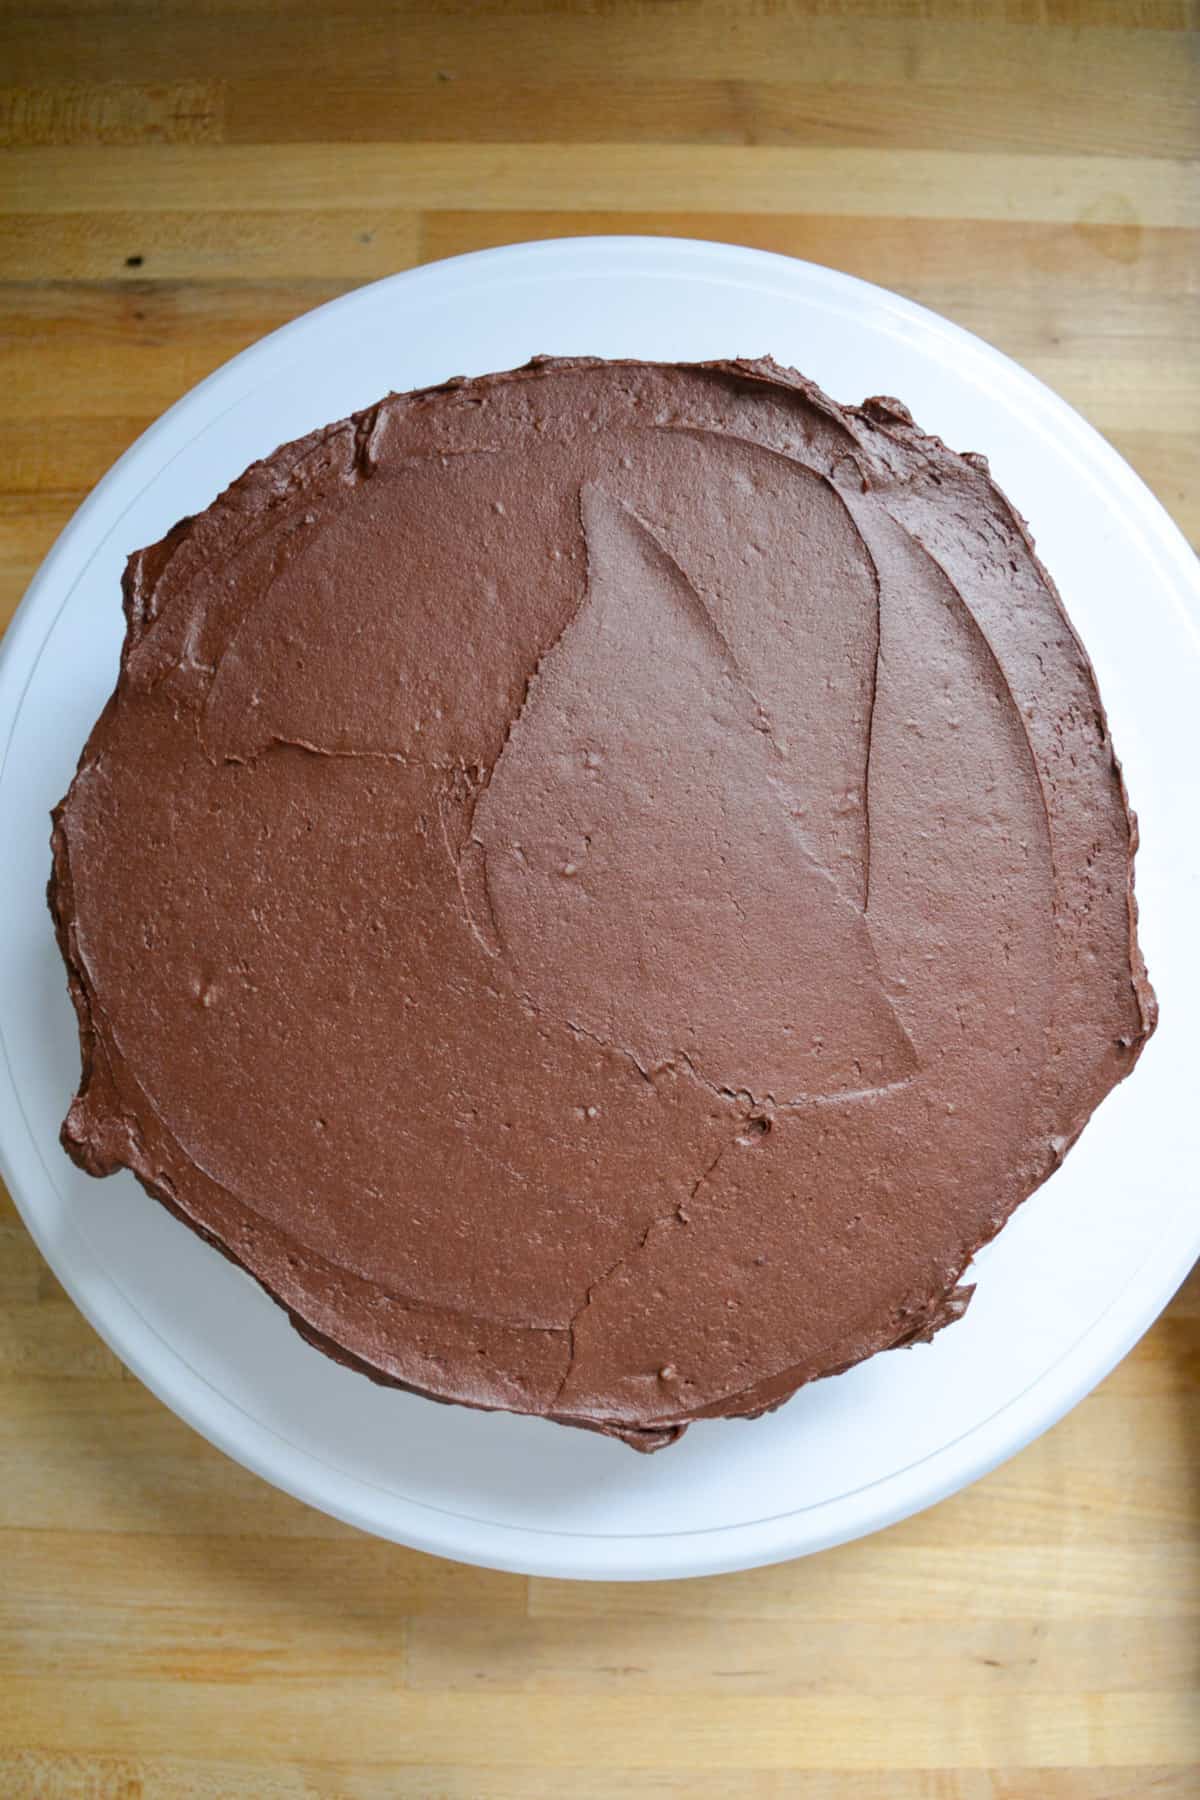 Vegan gluten-free chocolate cake frosting with chocolate frosting on a cake board.